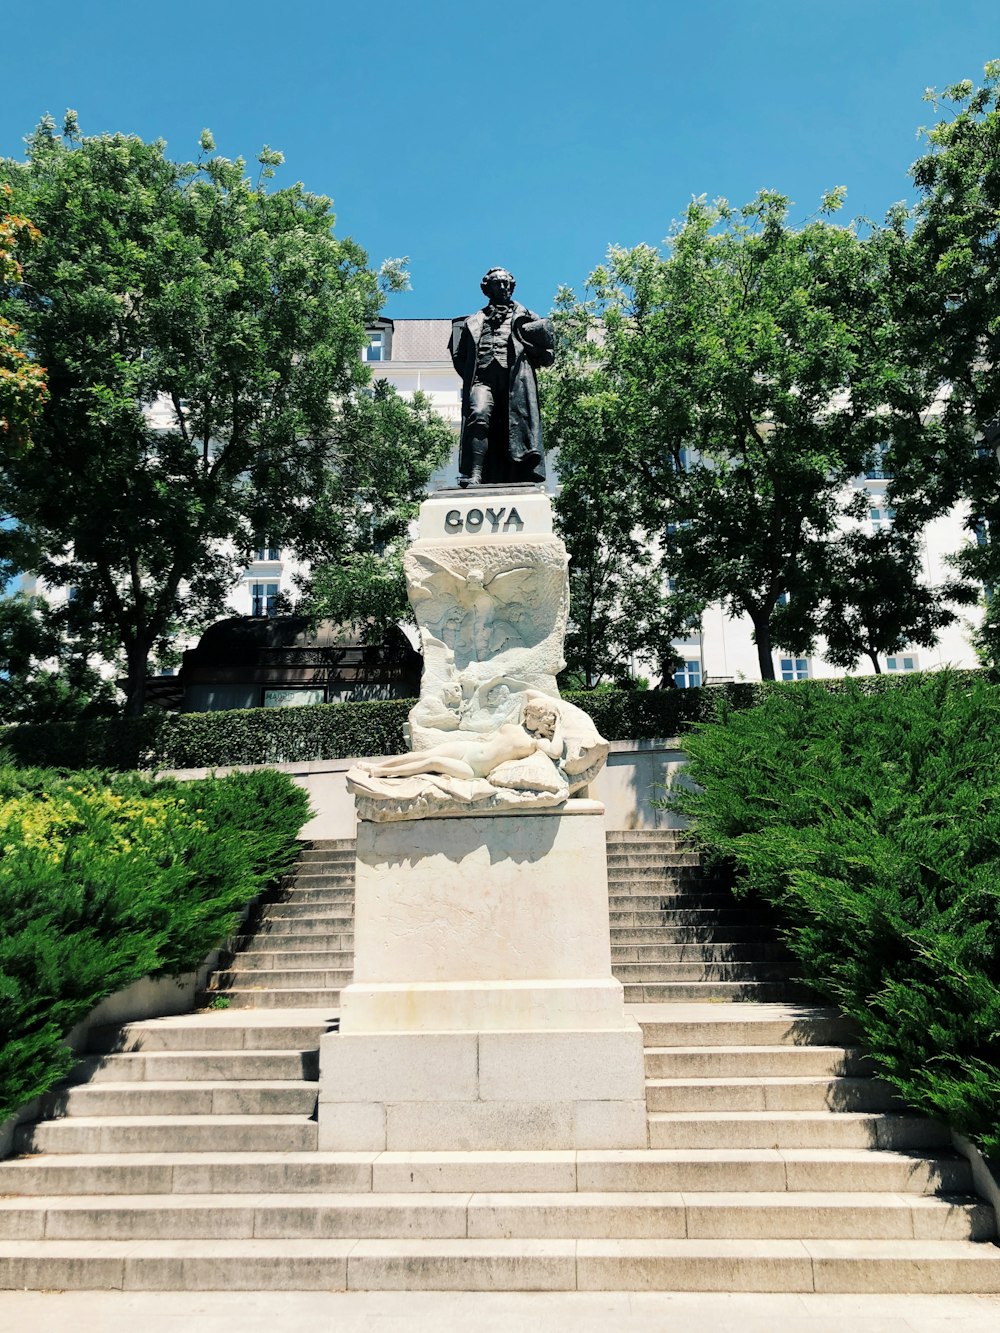 Goya statue outside of the Prado Museum